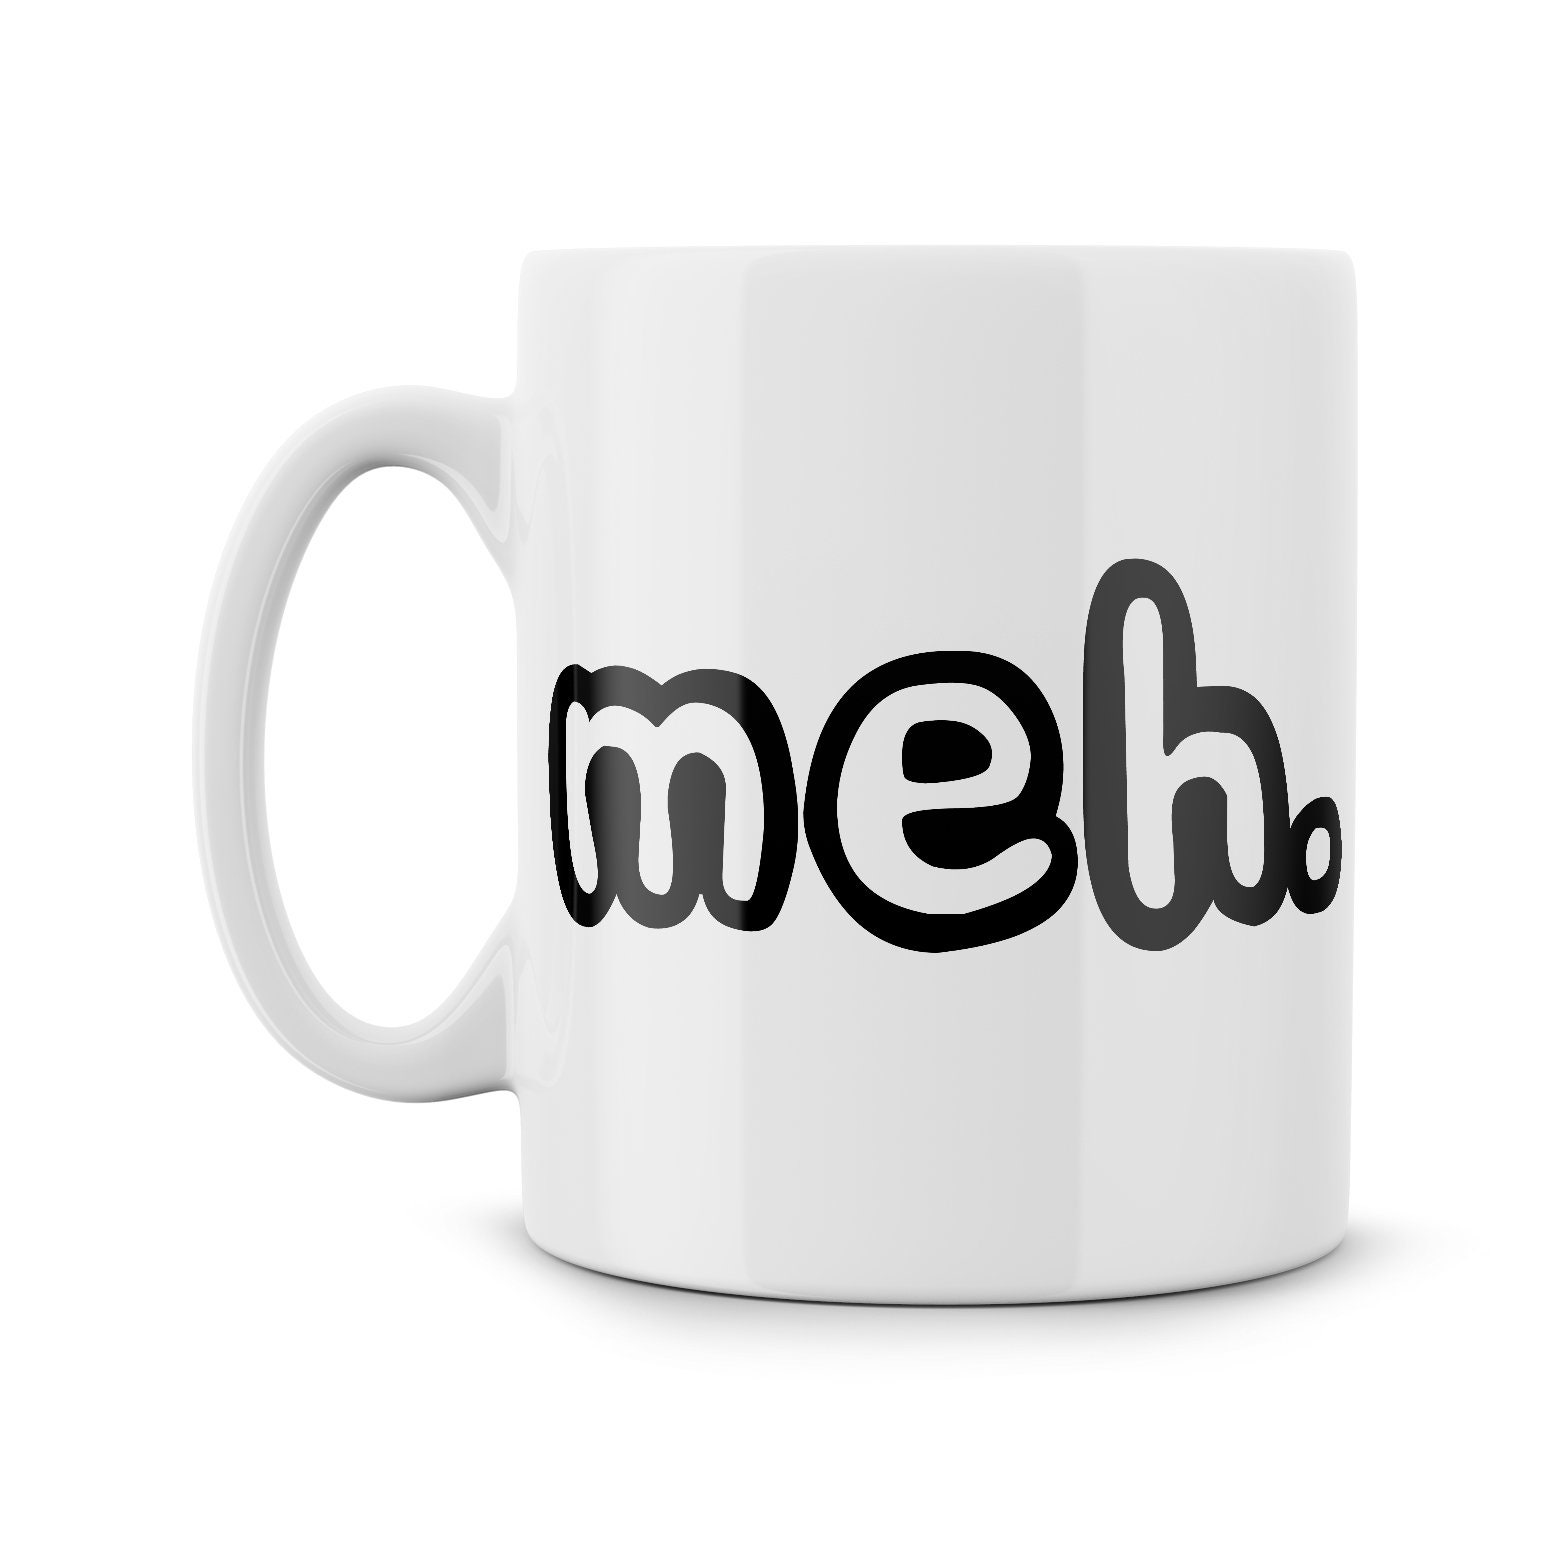 Meme Coffee Mug Meme Is My Favorite Funny 11 oz Black Ceramic Tea Cup Cute 